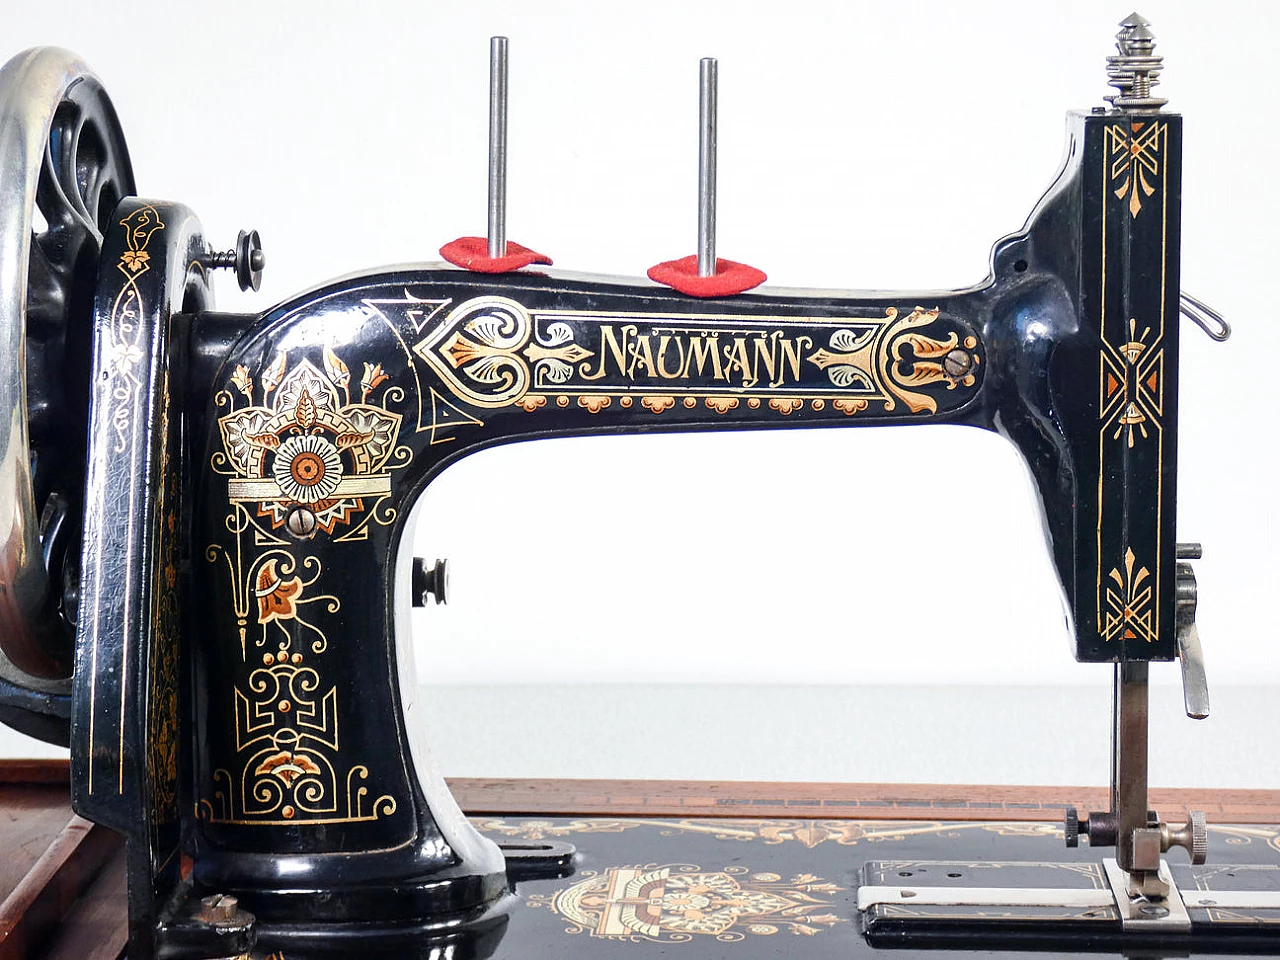 Naumann portable sewing machine, early 20th century 13